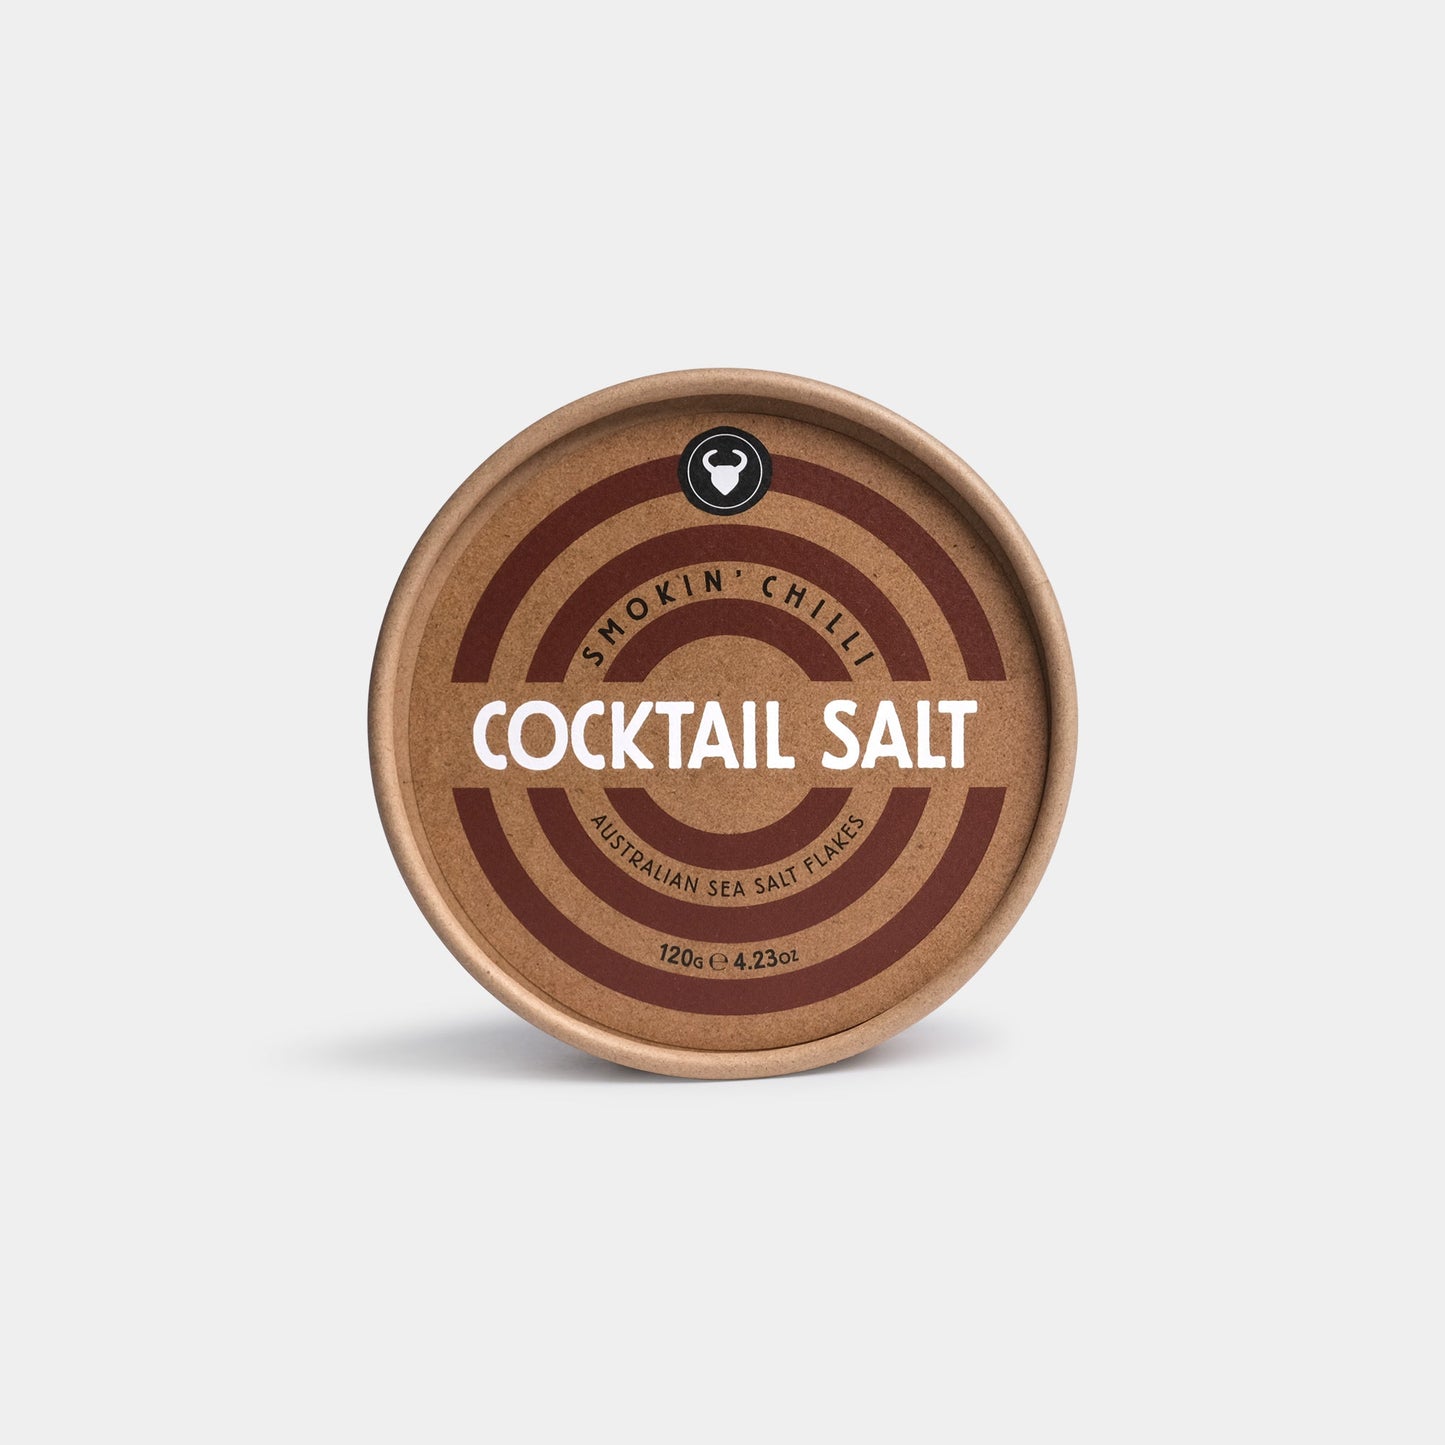 Small Batch Providore - Smokin’ Chilli Cocktail Salt - front view